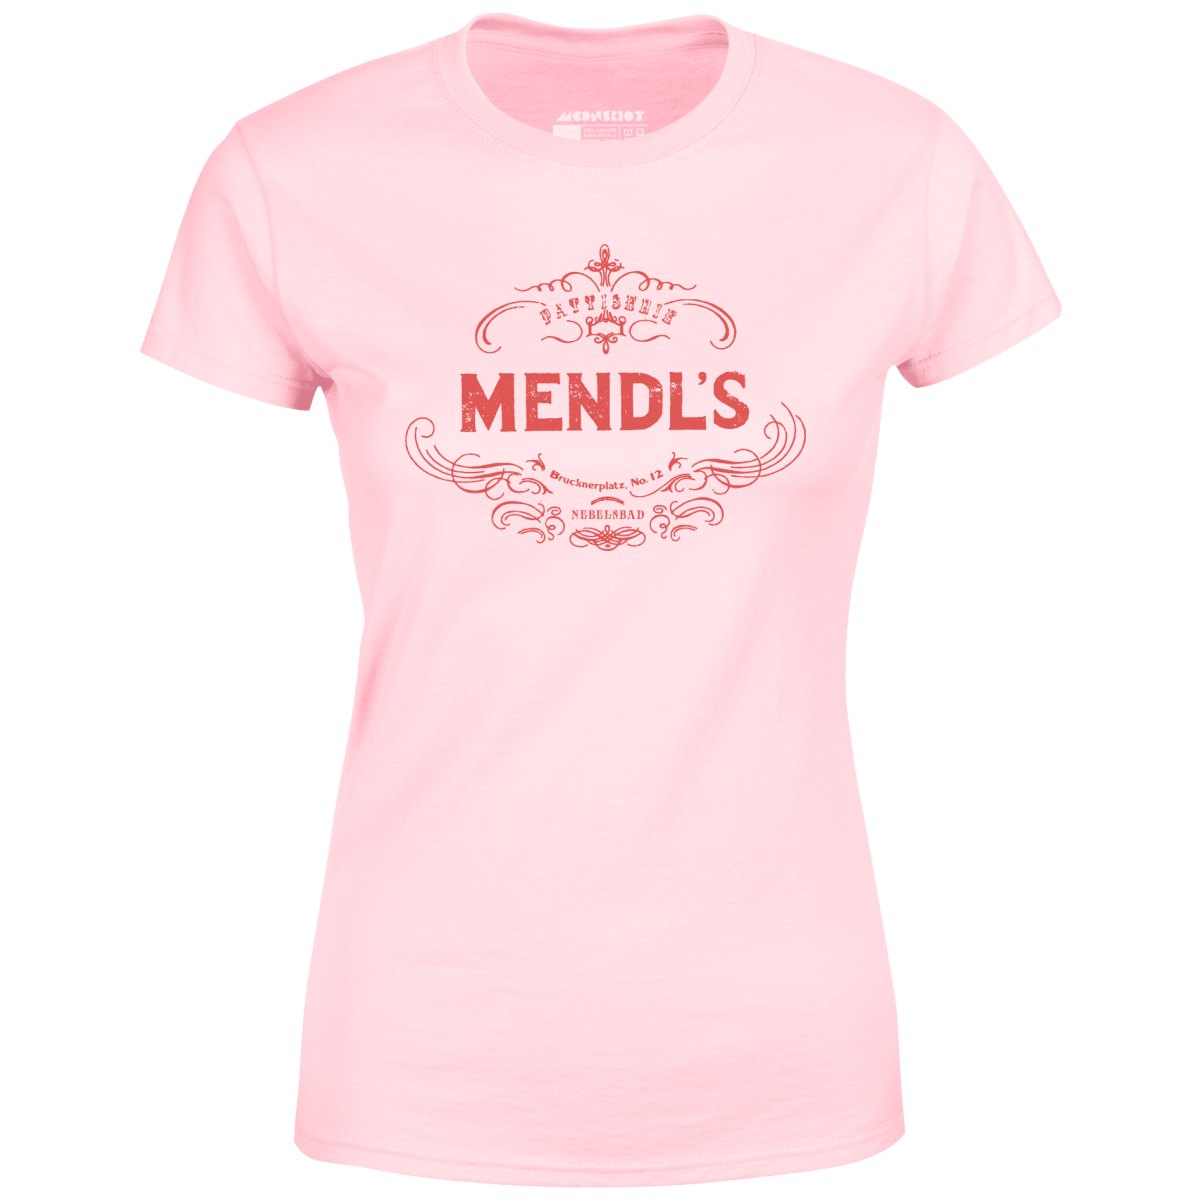 Mendl's Pattiserie - The Grand Budapest Hotel - Women's T-Shirt